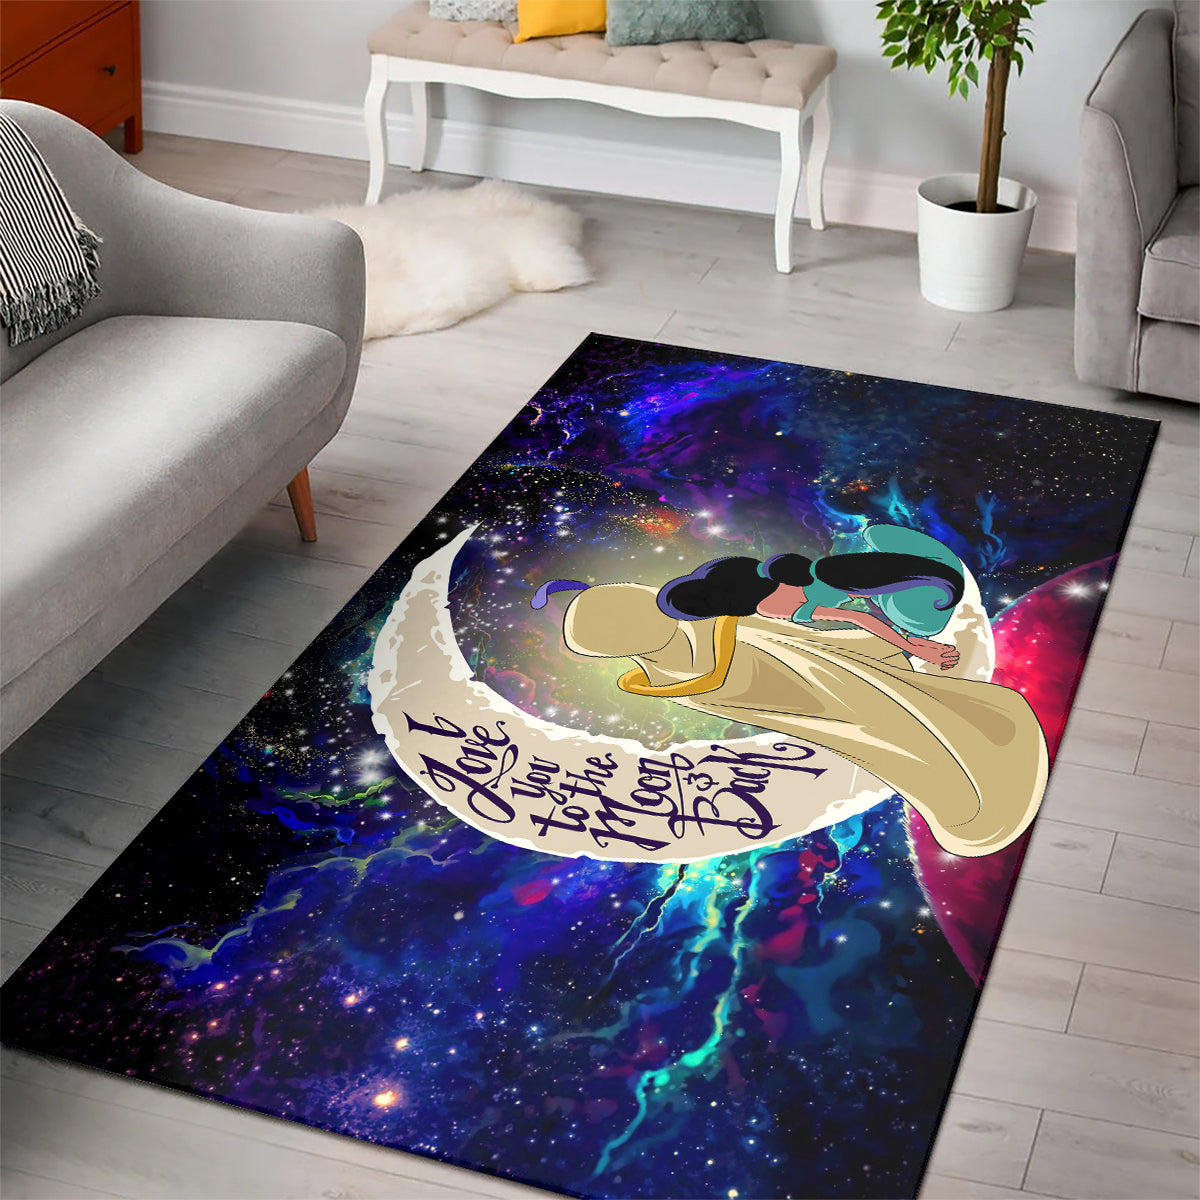 Aladin Couple Love You To The Moon Galaxy Carpet Rug Home Room Decor